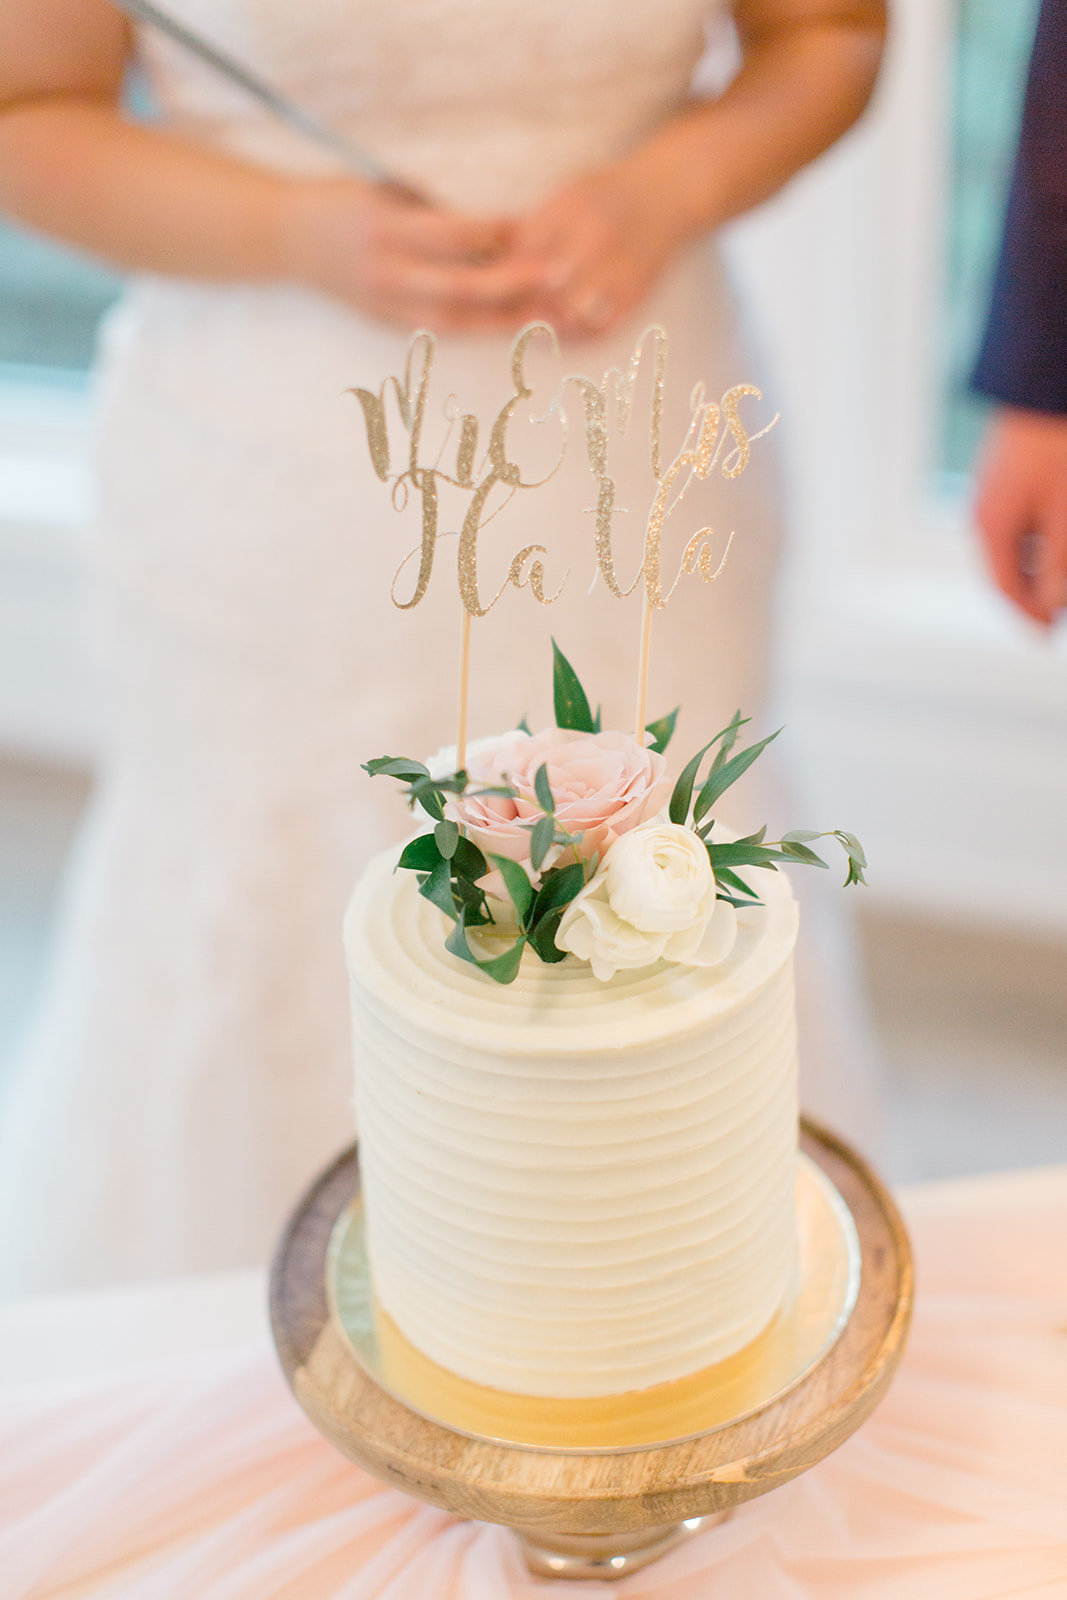 Wedding reception, wedding table arrangement, wedding decor, modern wedding inspiration, wedding cake, simple wedding cake, wedding cake inspiration